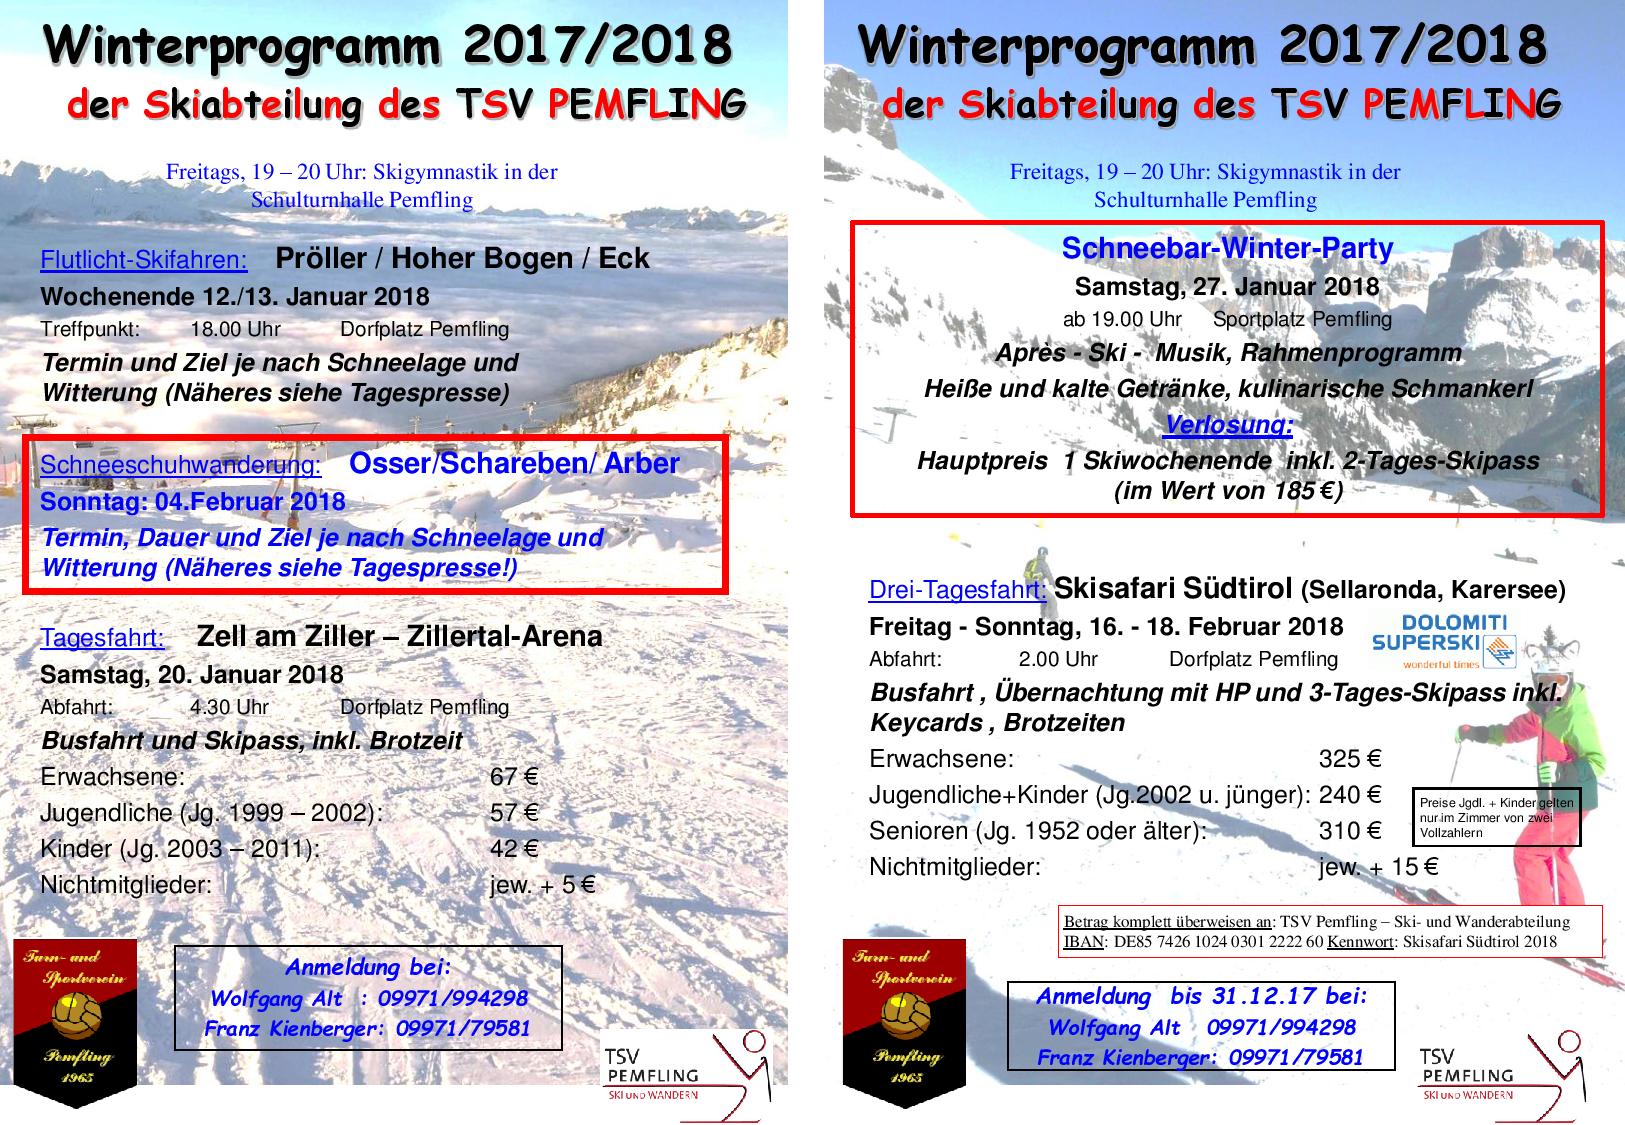 Winterprogramm 2017/2018